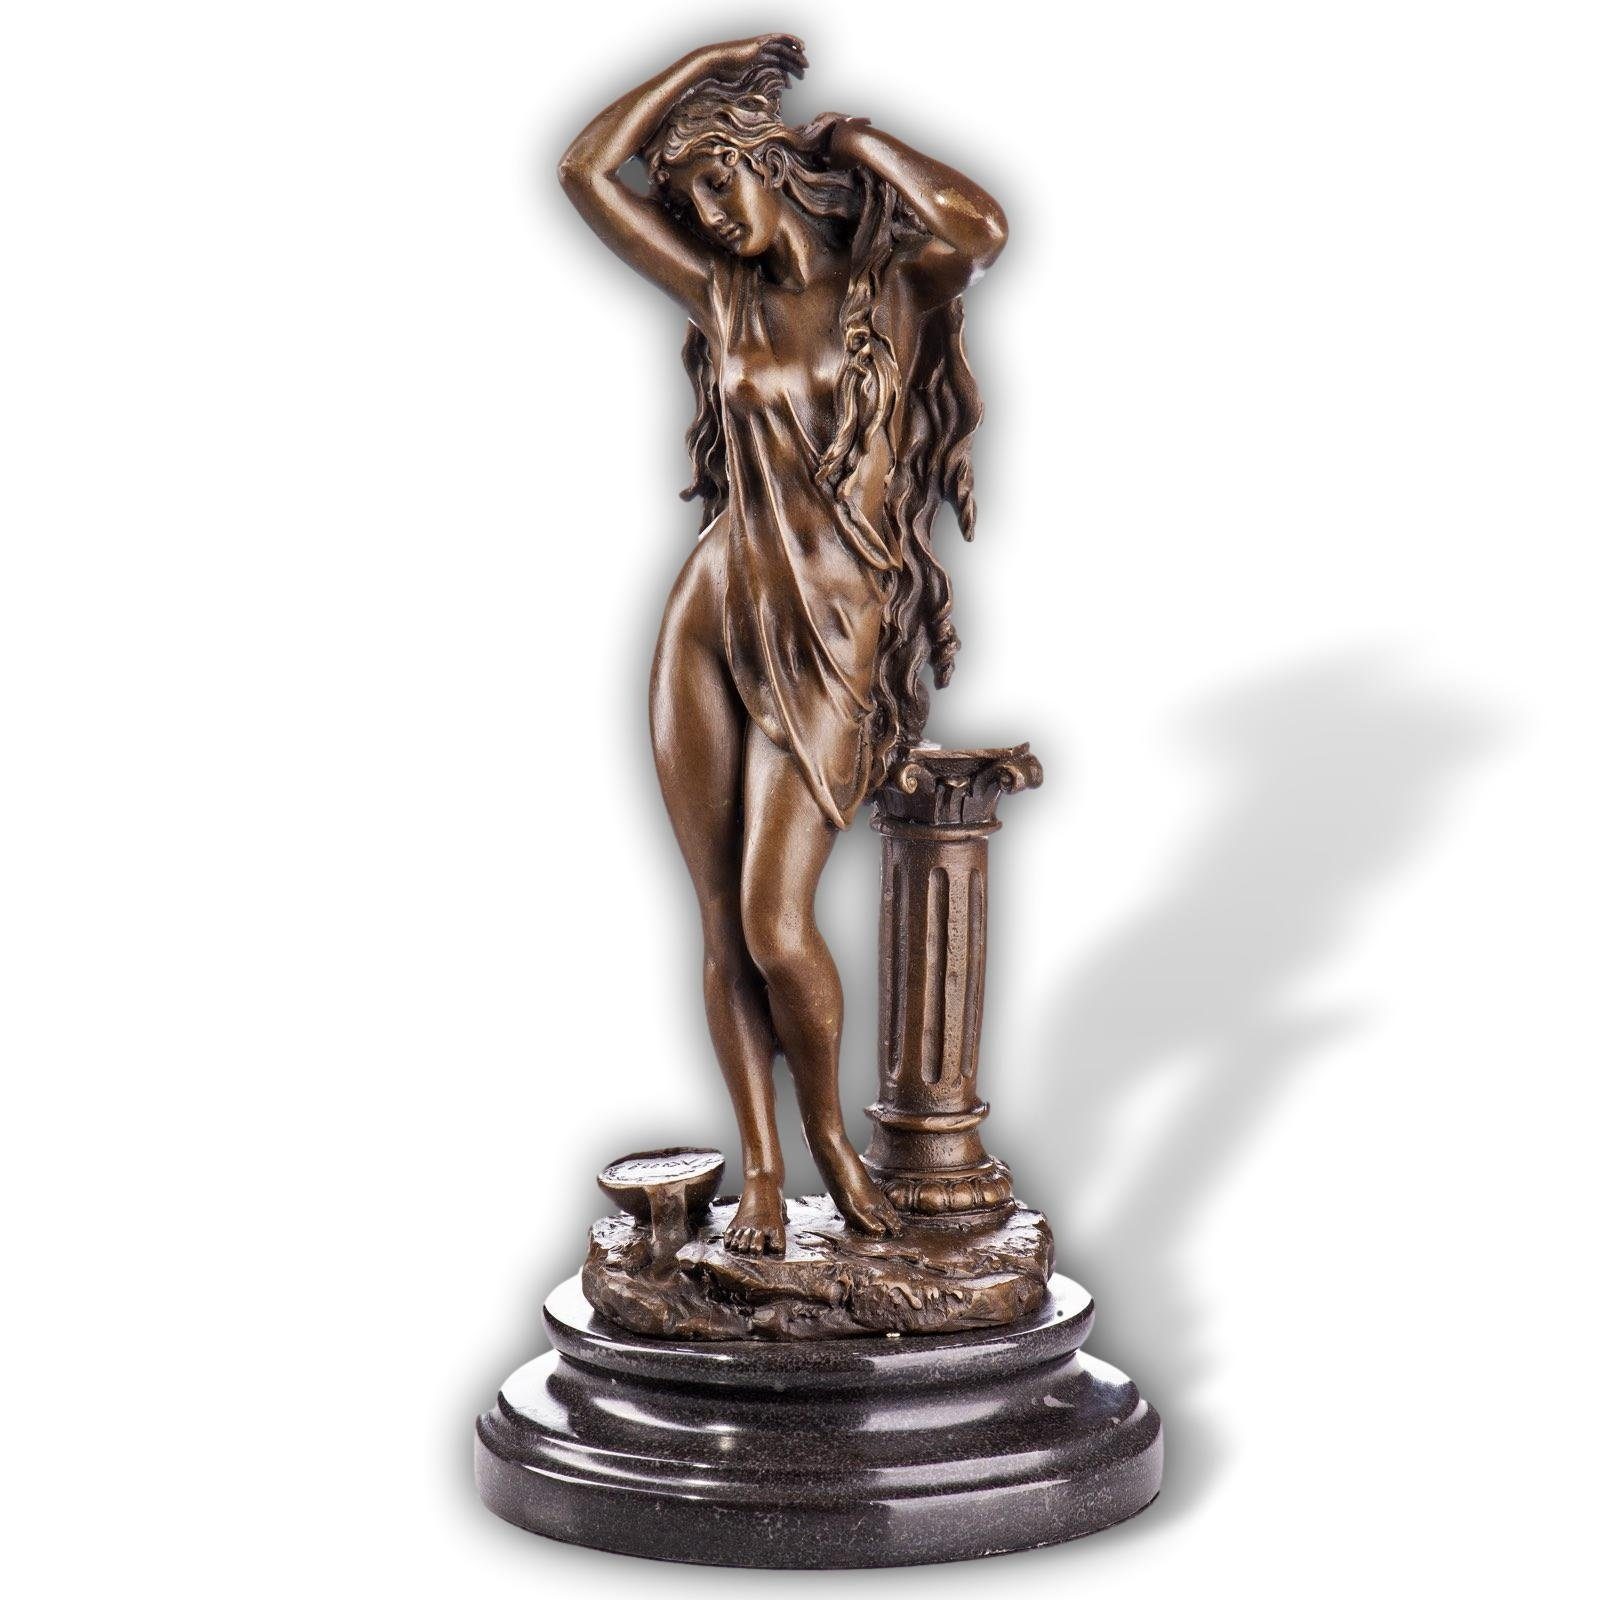 Aubaho Skulptur Skulptur Bronze Figur badende Dame Akt Erotik Statue 32cm Antik-Stil